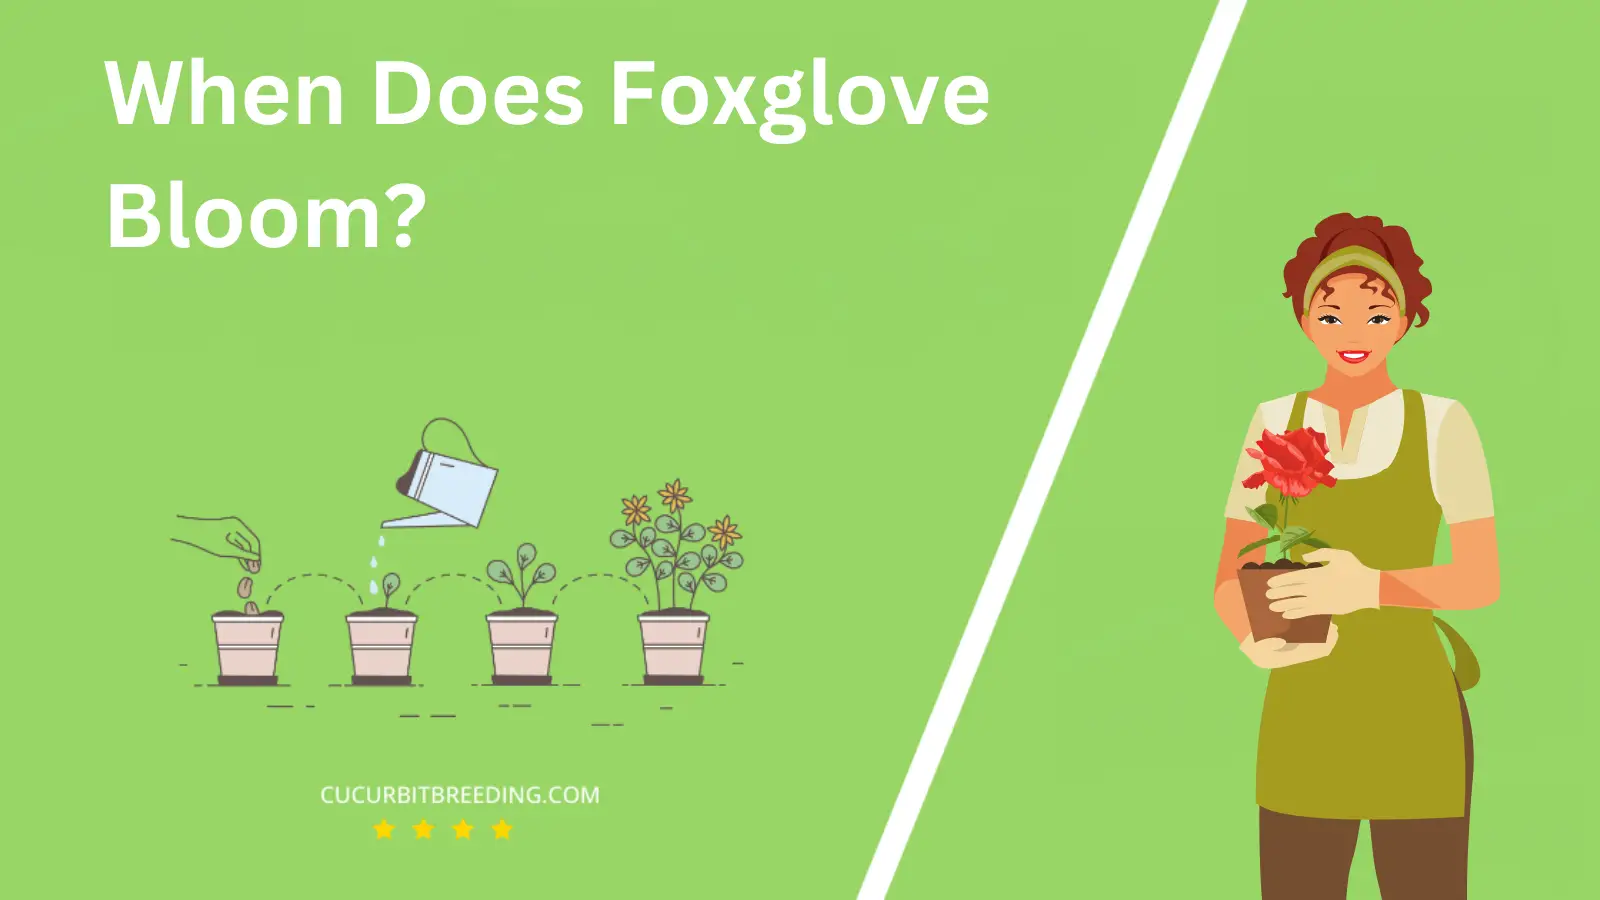 When Does Foxglove Bloom?